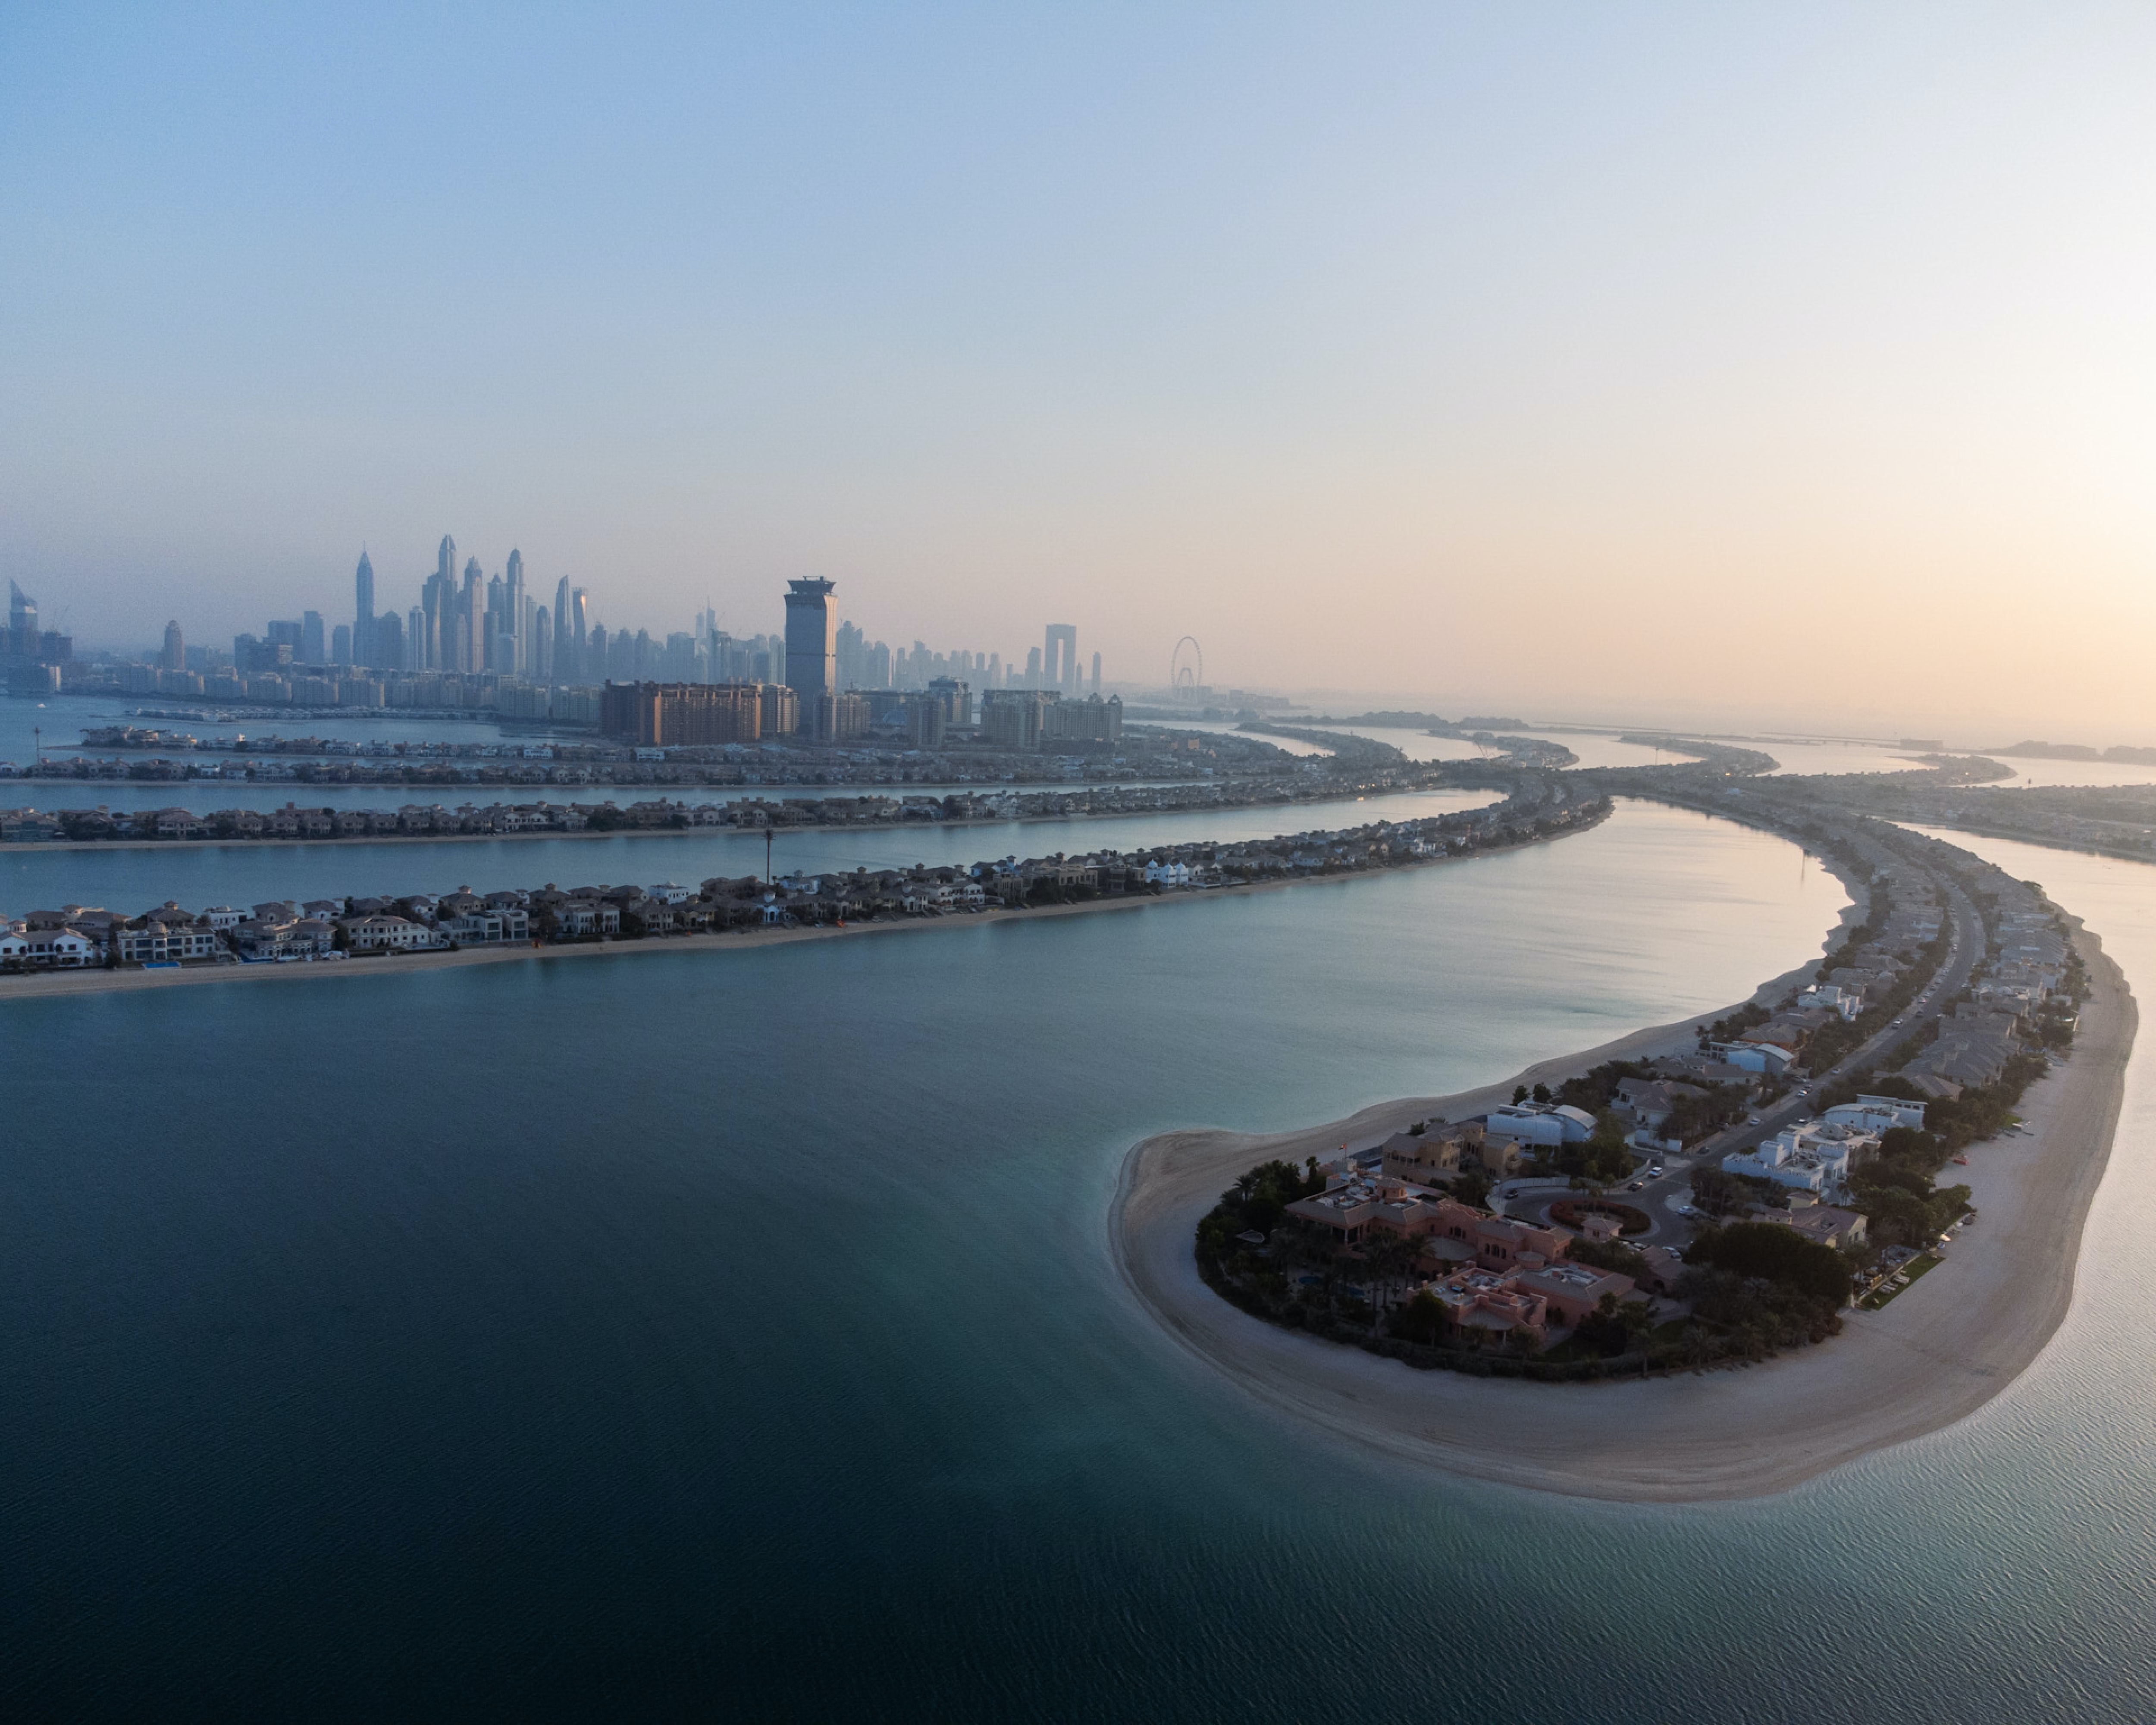 Nakheel Aligns with Dubai’s Real-Estate Priorities through Latest Re-branding